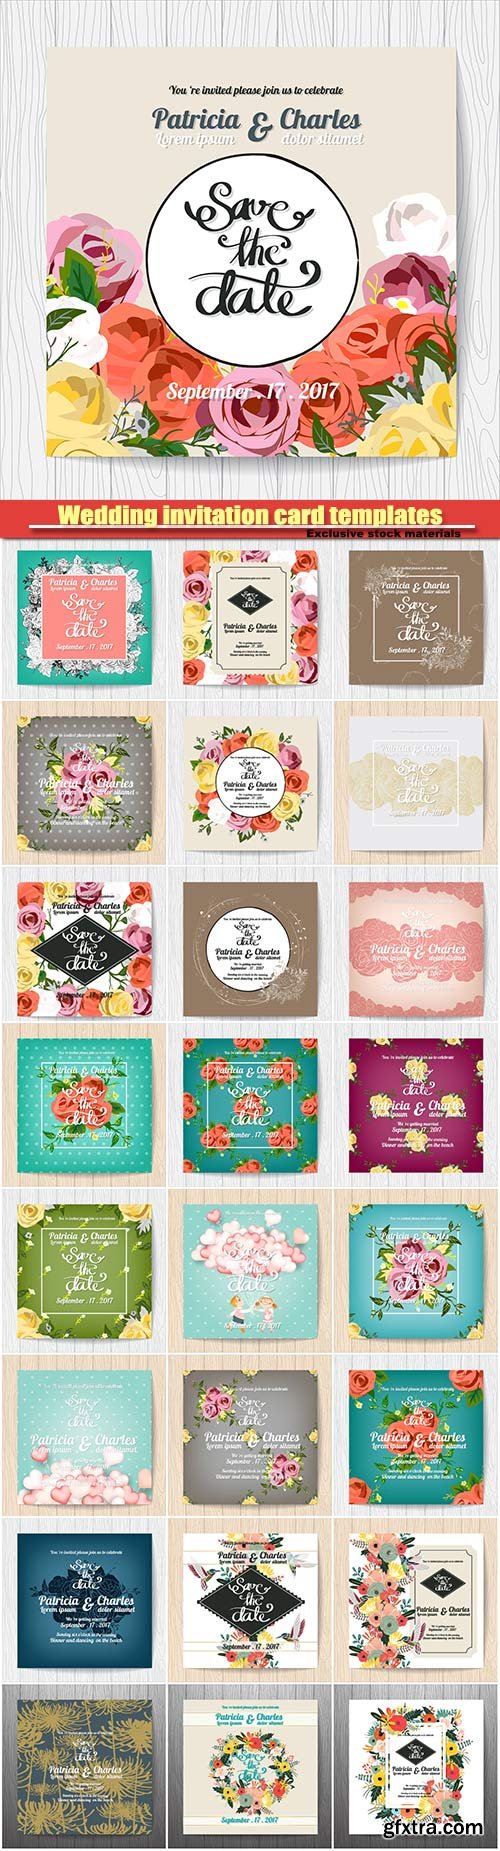 Wedding invitation card templates, flower blossom seamless pattern background